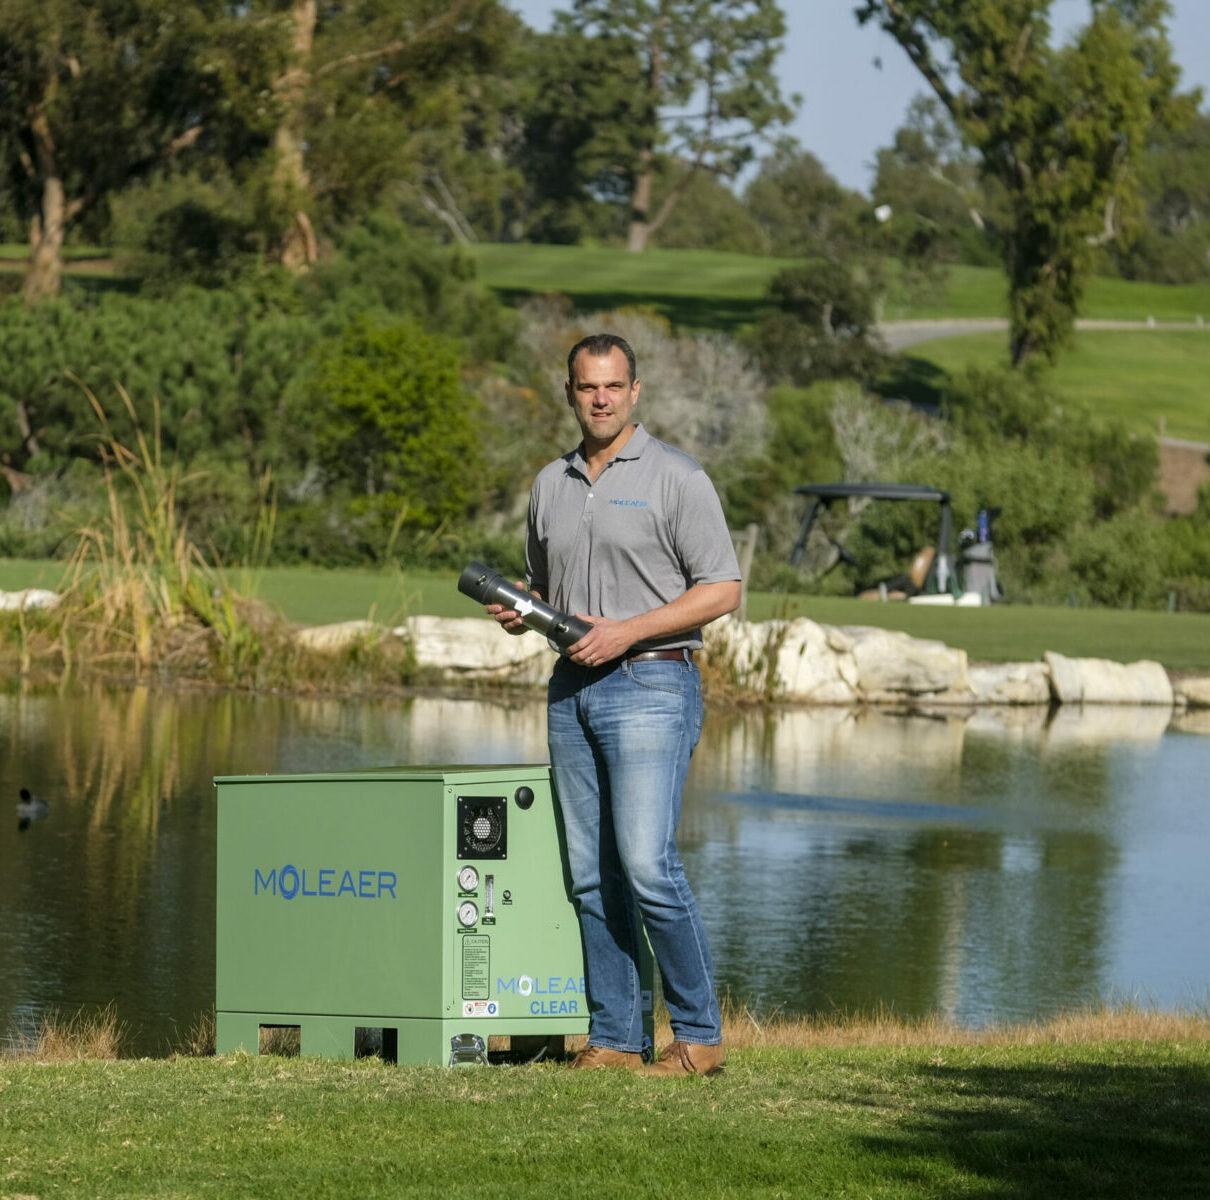 Water Aeration Company Moleaer Raises $40M - Los Angeles Business Journal